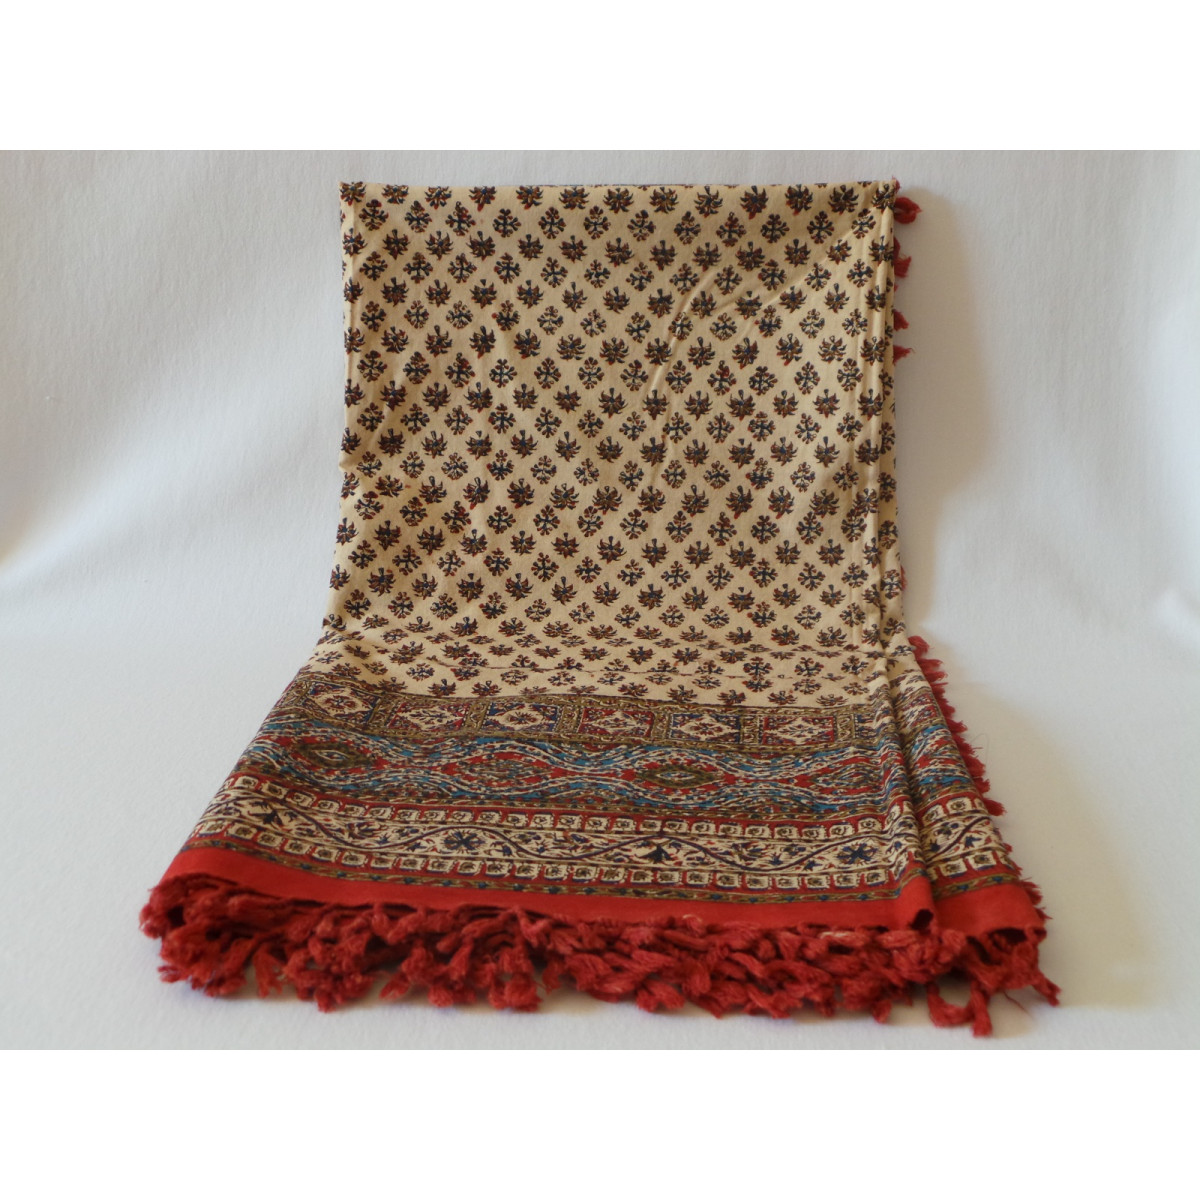 Persian Ghalamkar Tablecloth - HGH2053-Persian Handicrafts